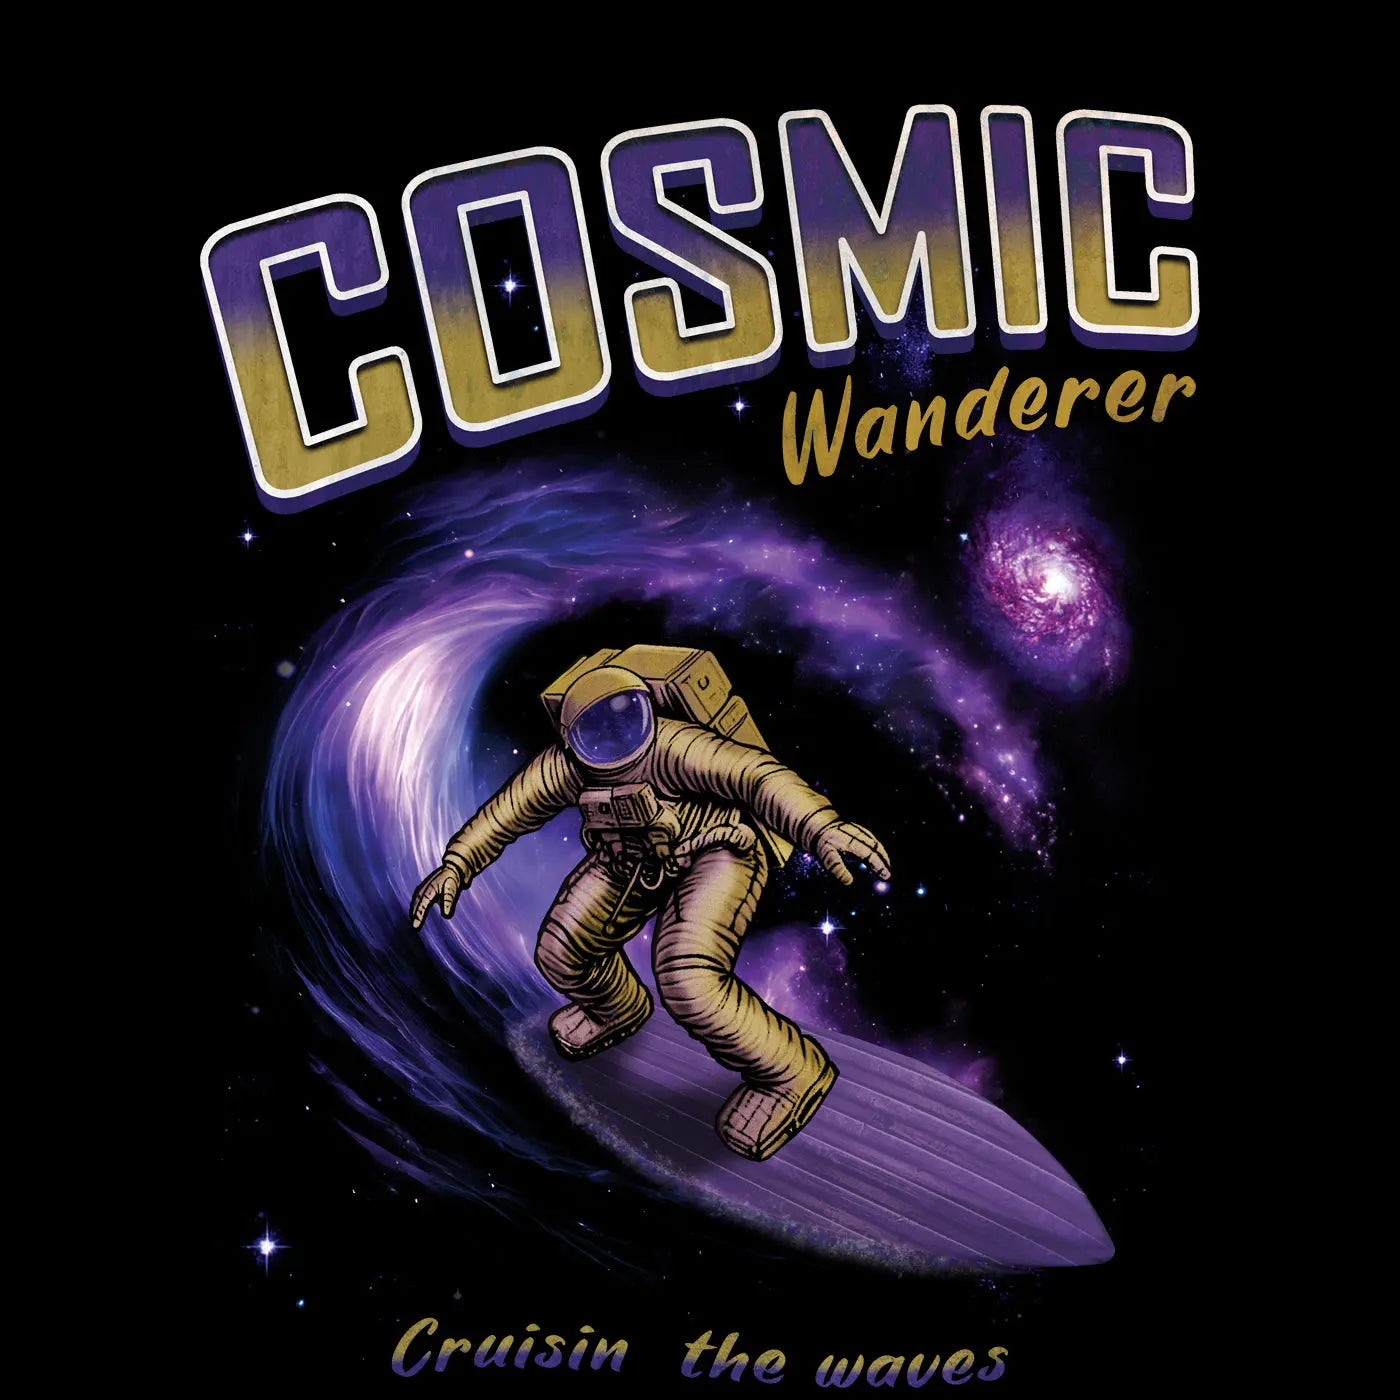 Cosmic-Wanderer - BC Ink Works